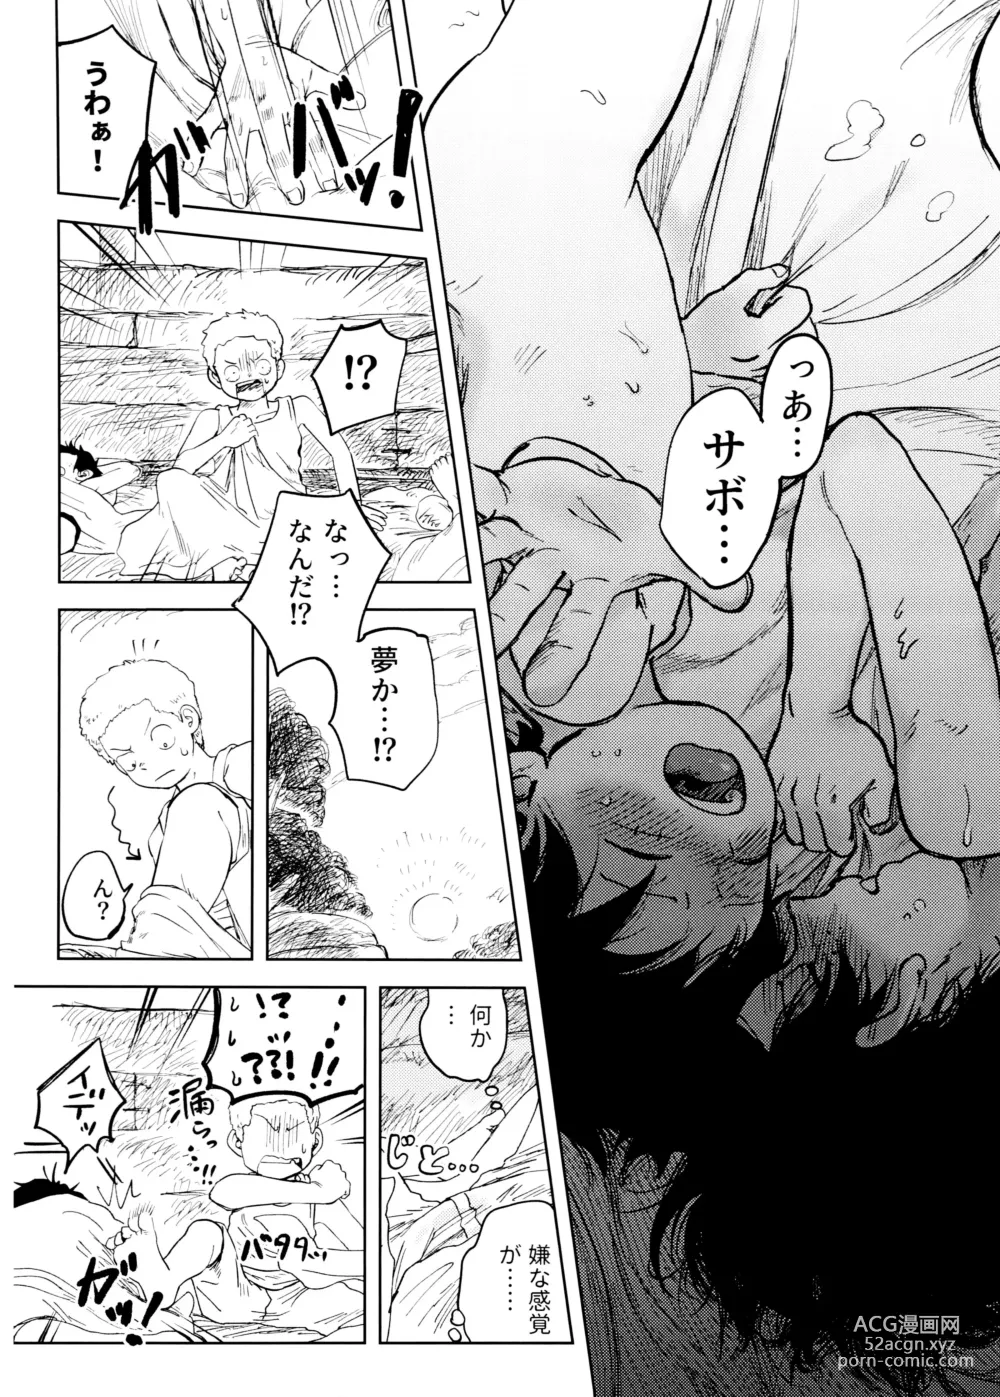 Page 13 of doujinshi Himitsu no Colubo Yama